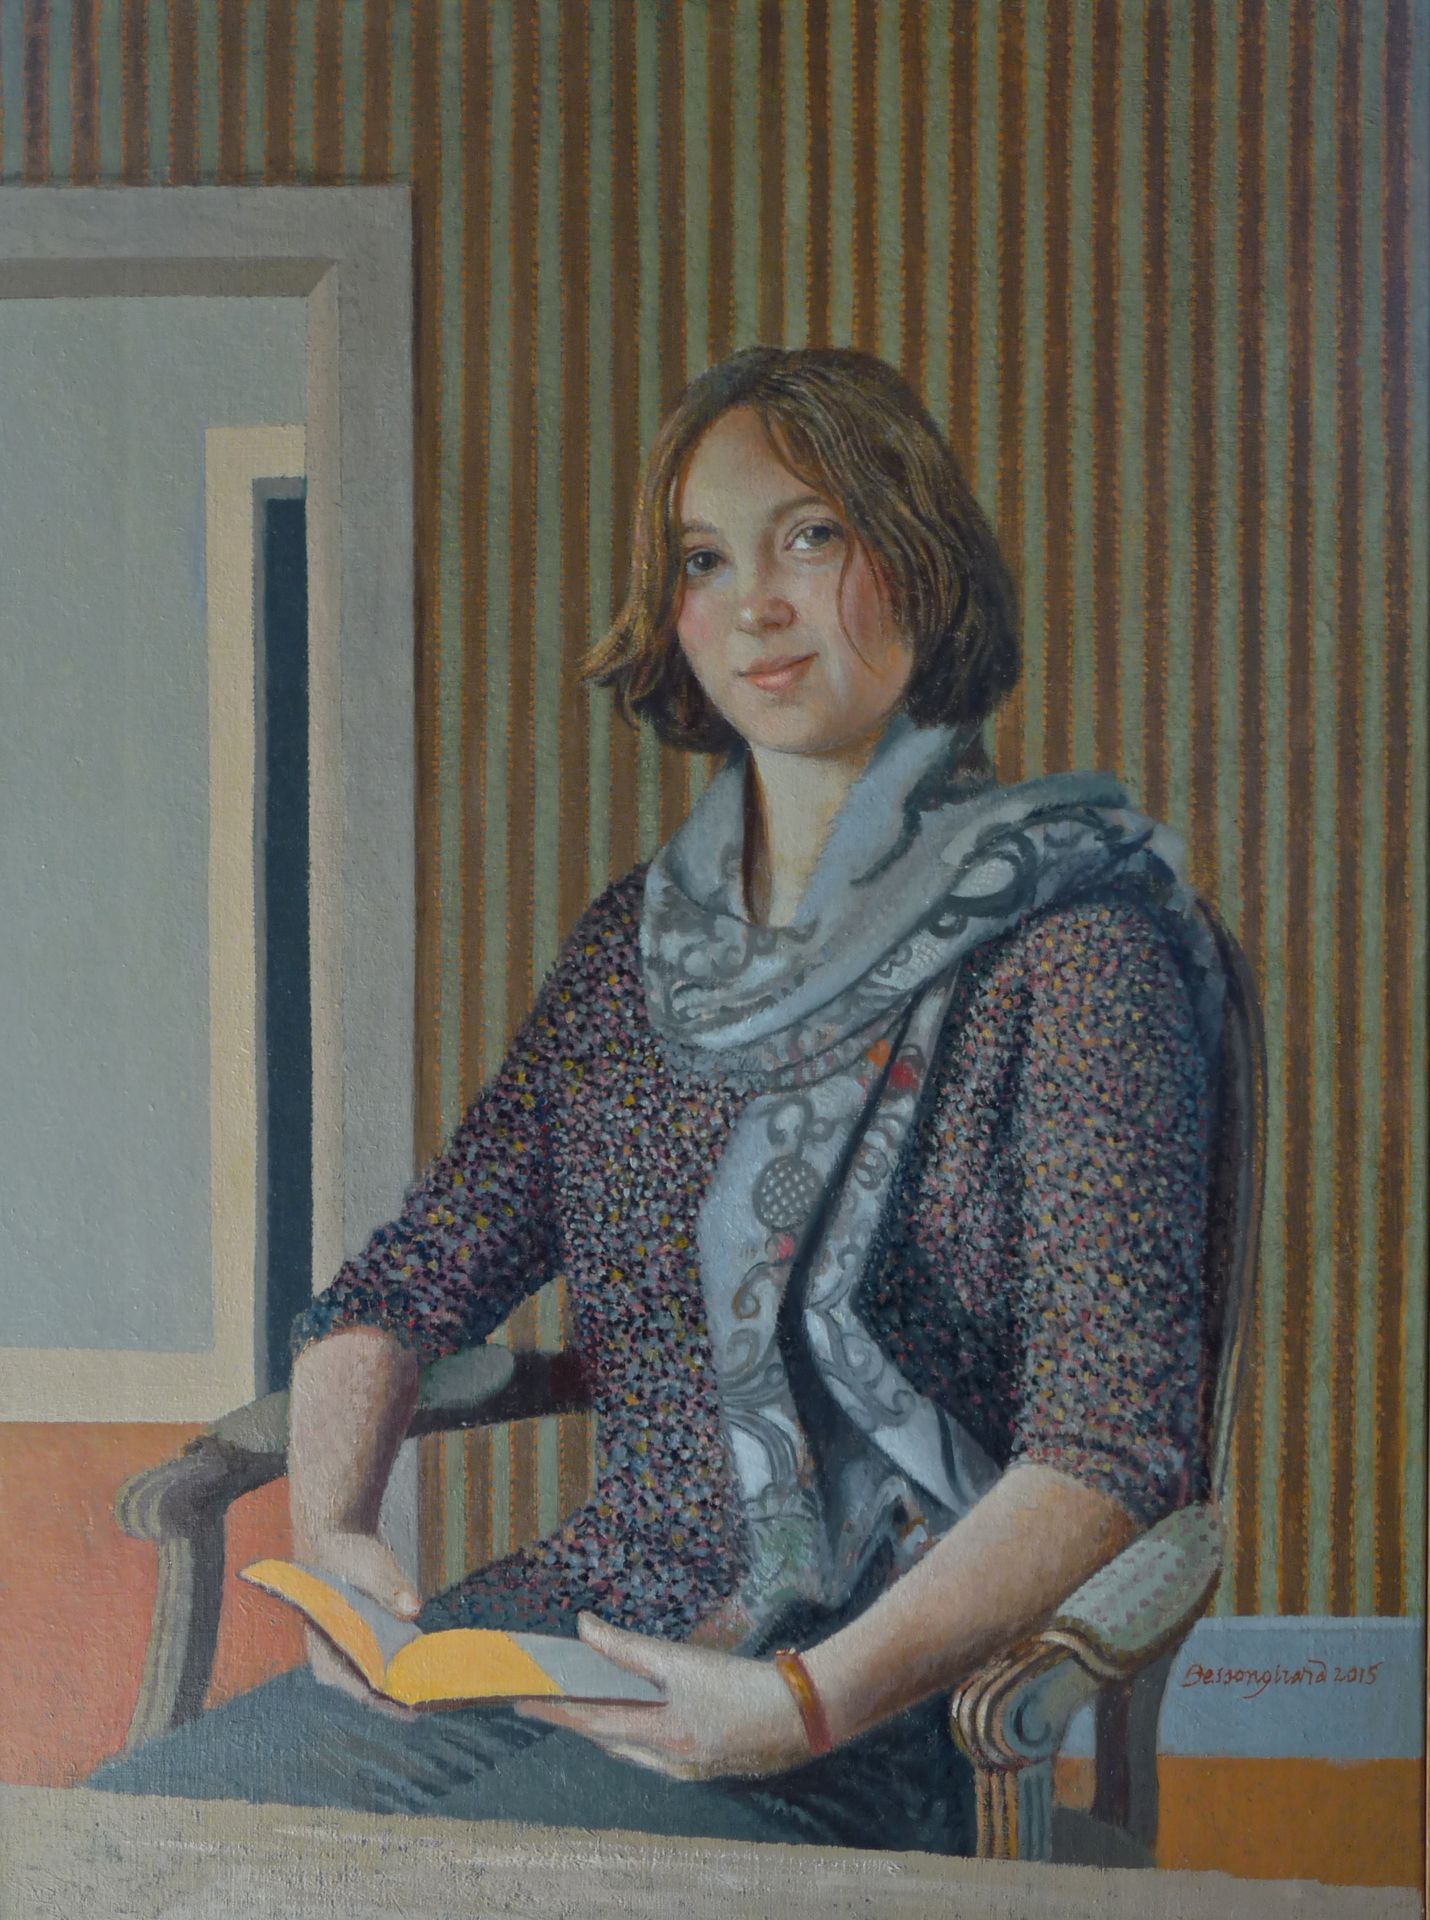 Null 让-克劳德-贝松-吉拉尔 (1938-2021)

伊娃, 2015

布面油画，右下方有签名和日期

81 x 60厘米